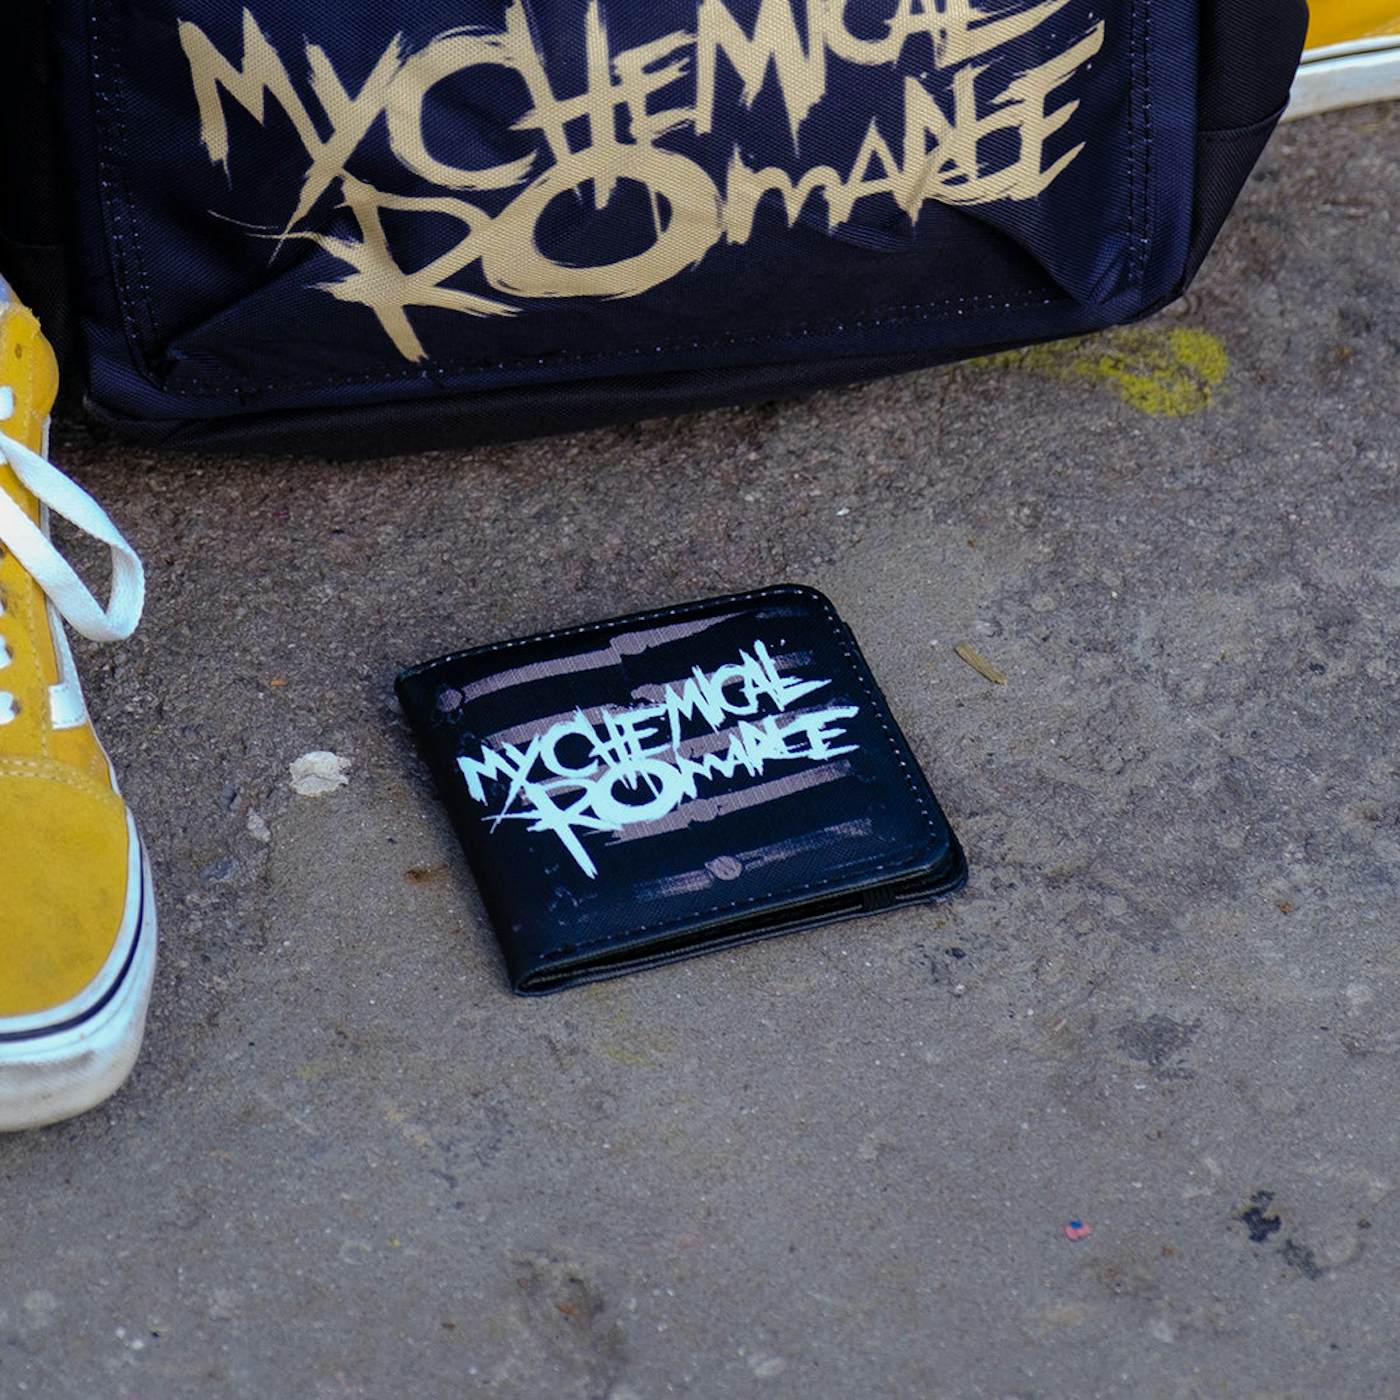 Rocksax My Chemical Romance Wallet - Parade